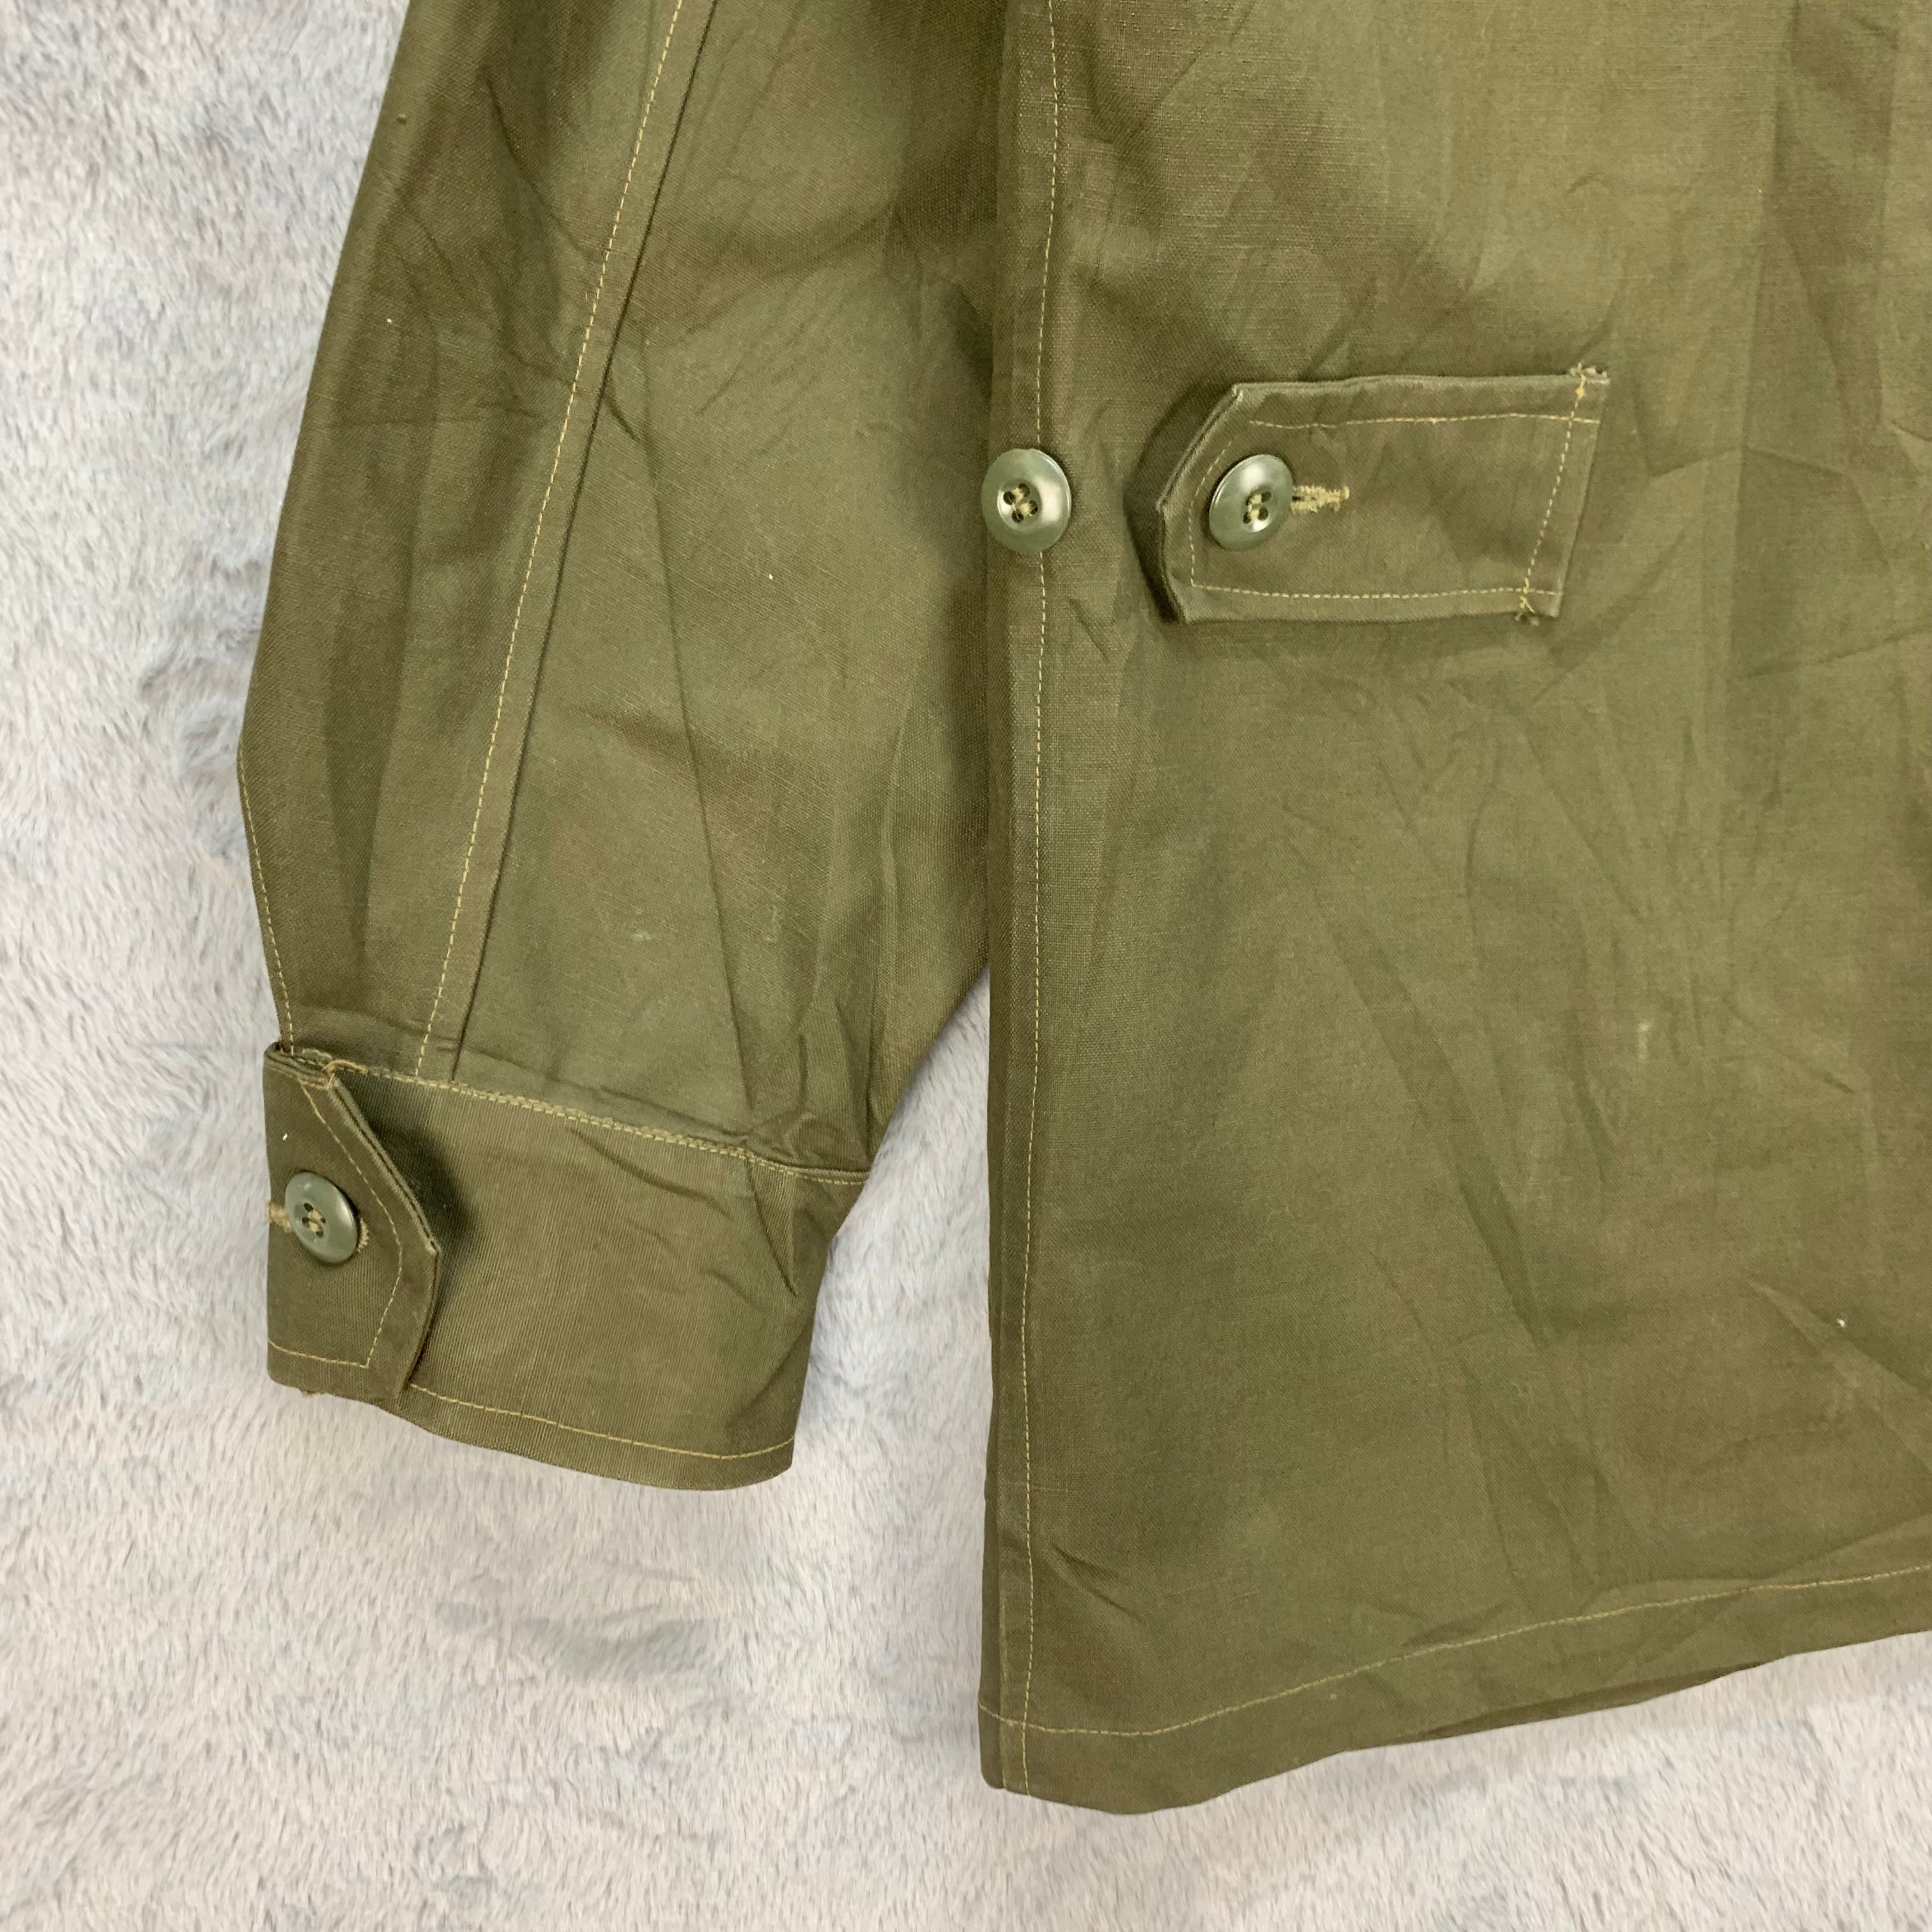 Vintage - Army Uniform Military Field Jacket / Chore Jacket #4400-152 - 10